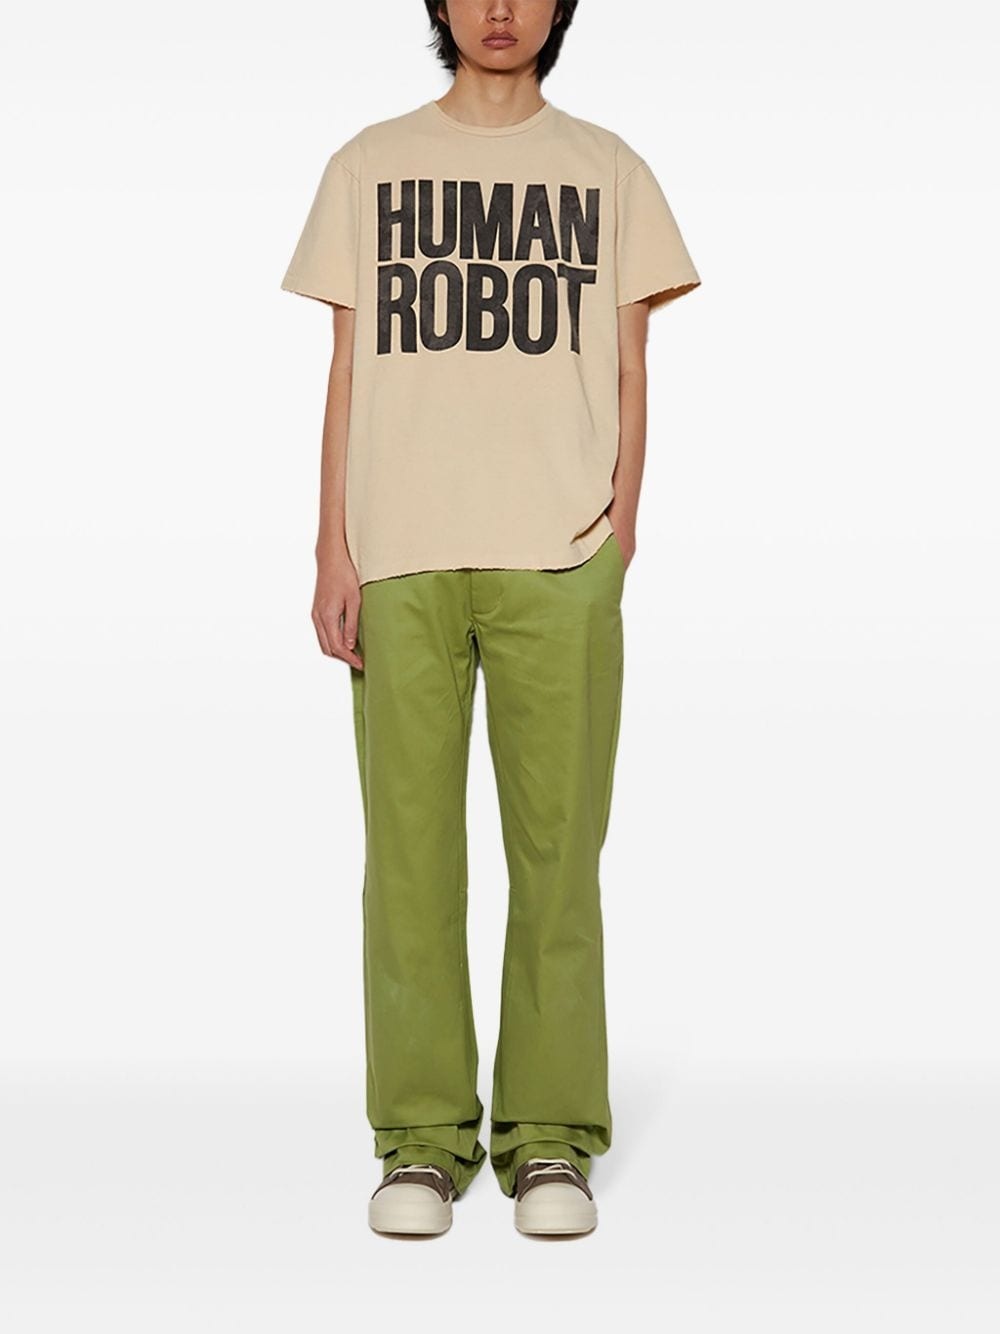 Human Robot cotton T-shirt - 2